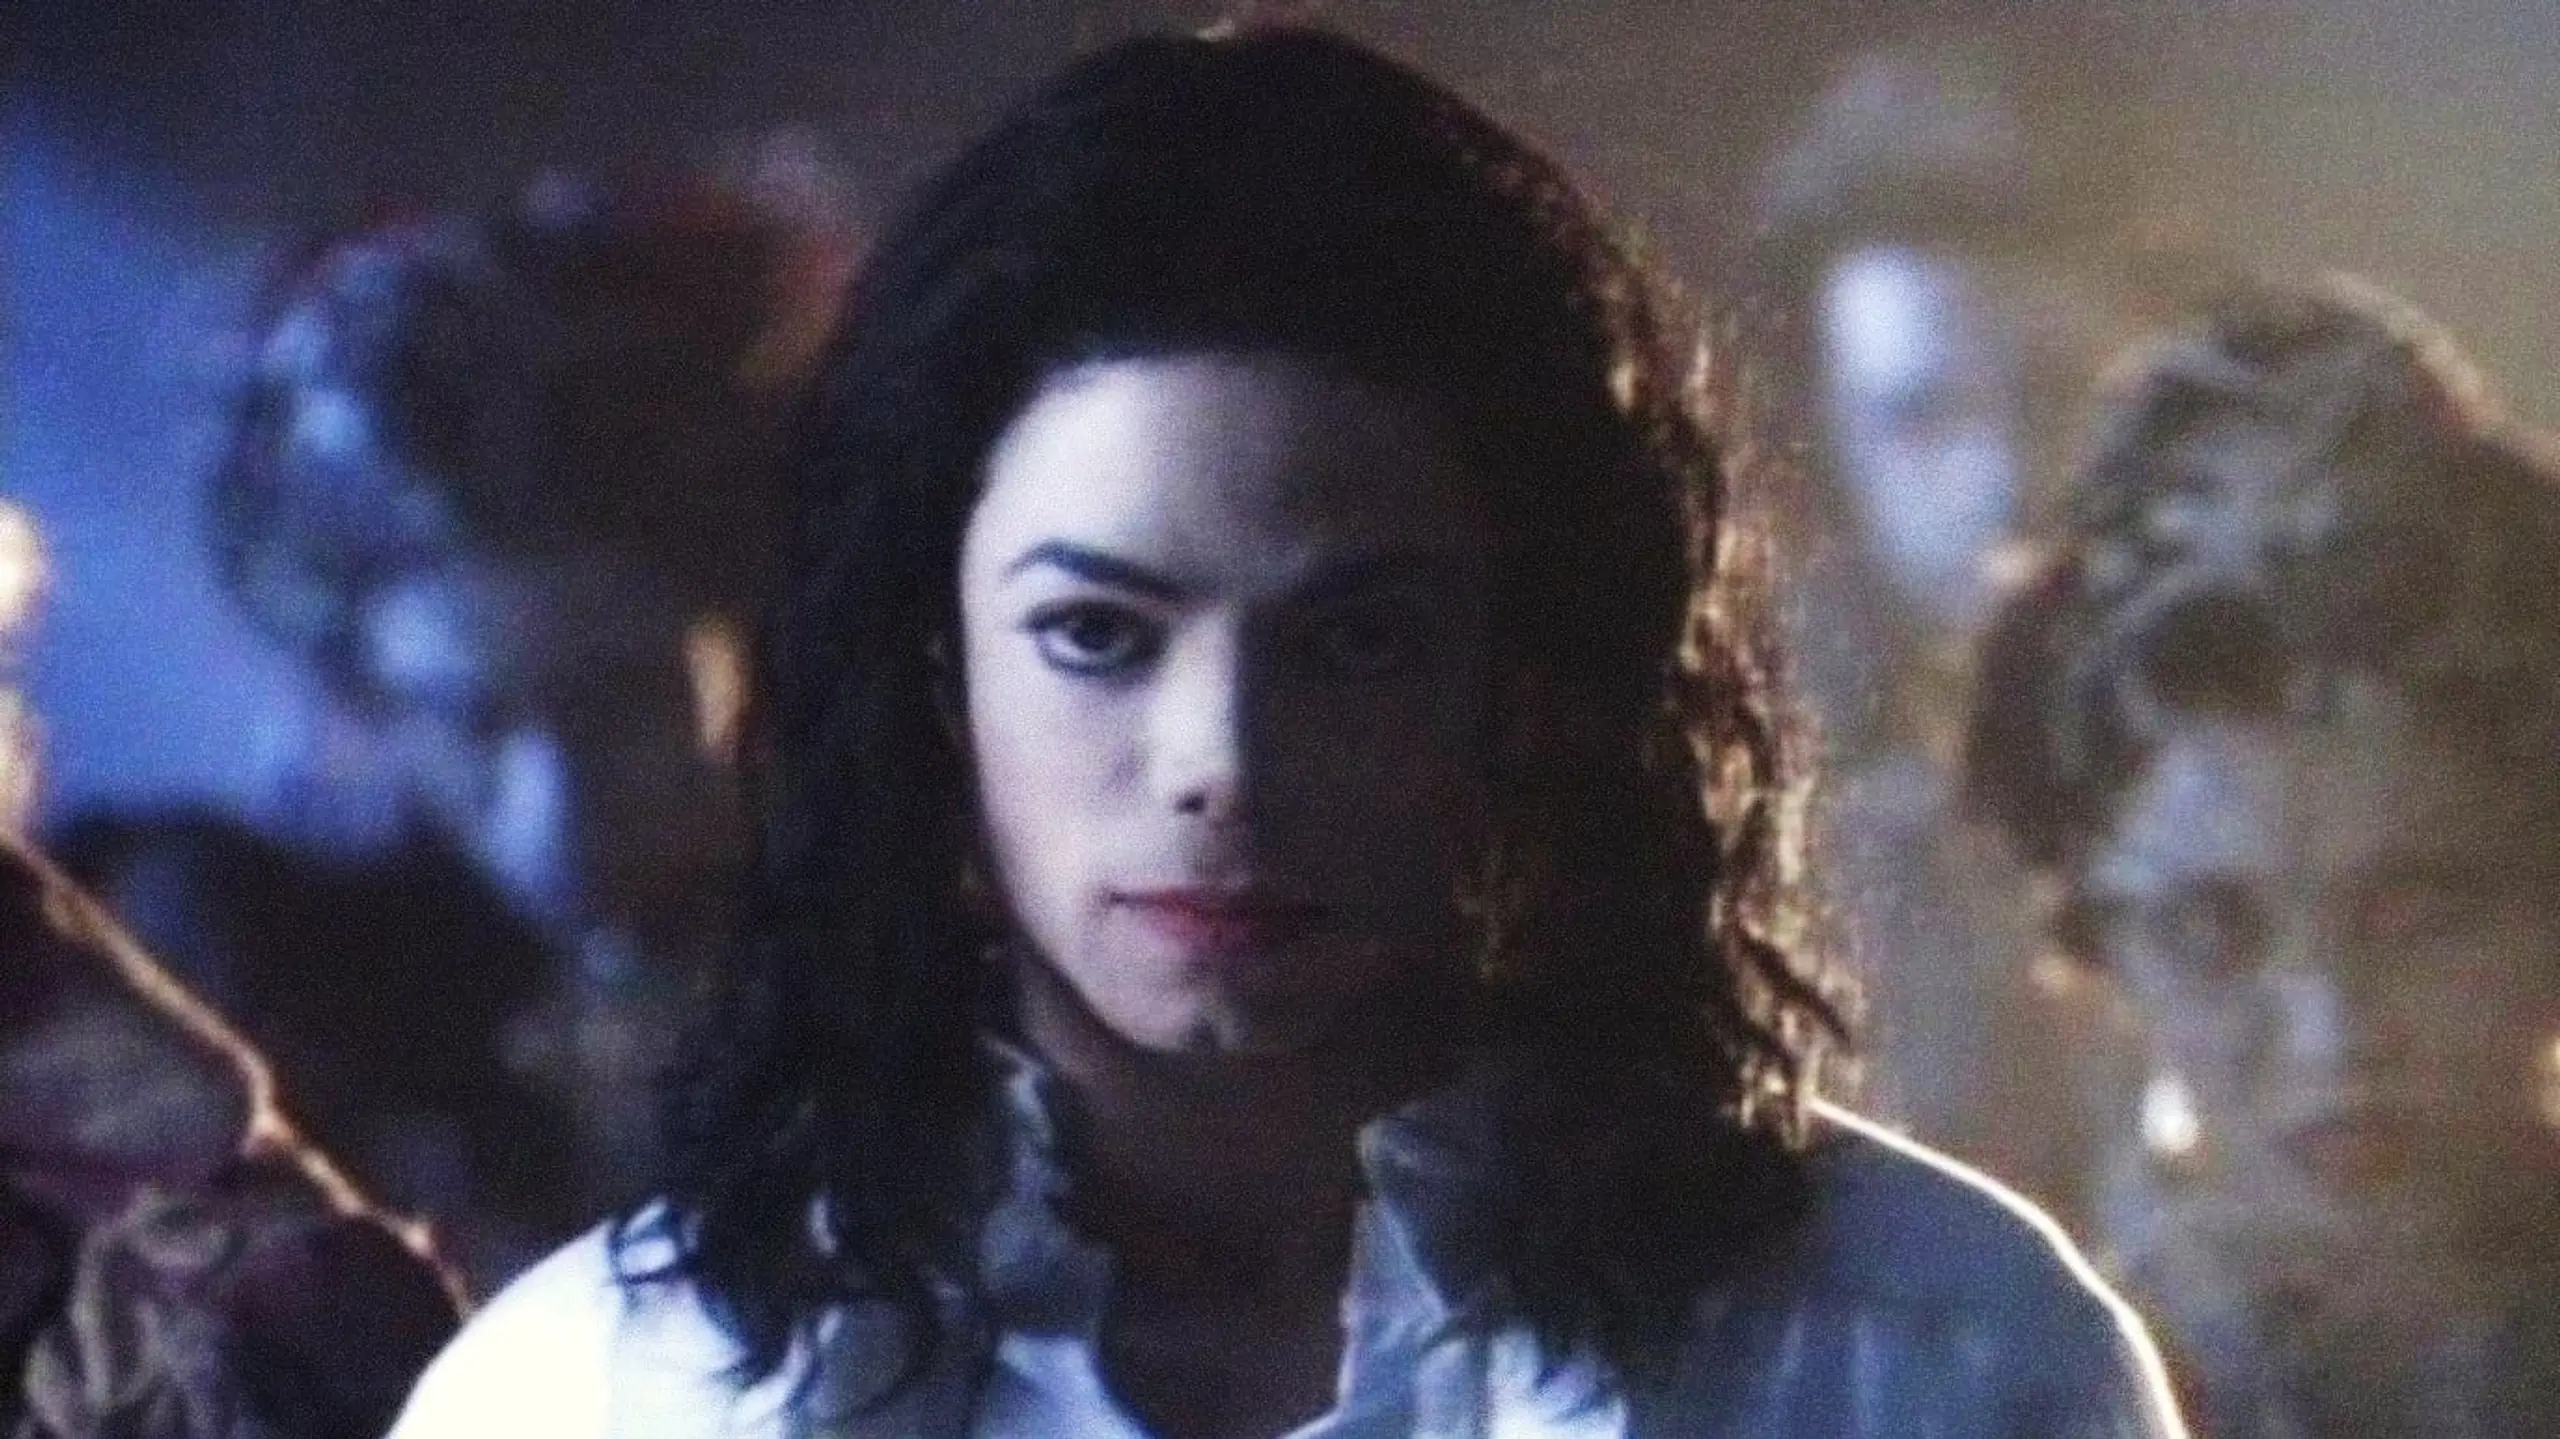 Michael Jackson's Ghosts